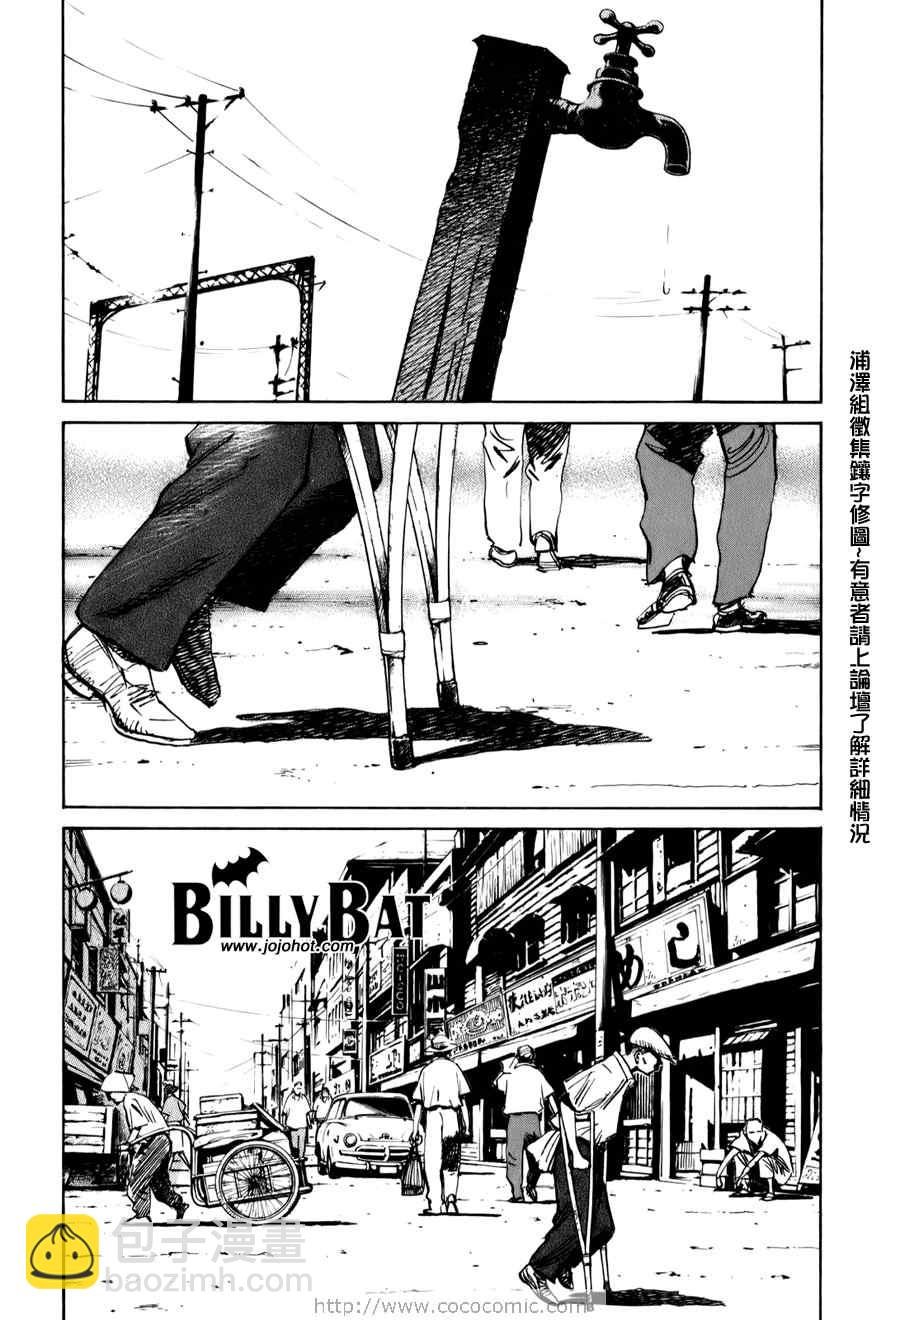 Billy_Bat - 第2話 - 5